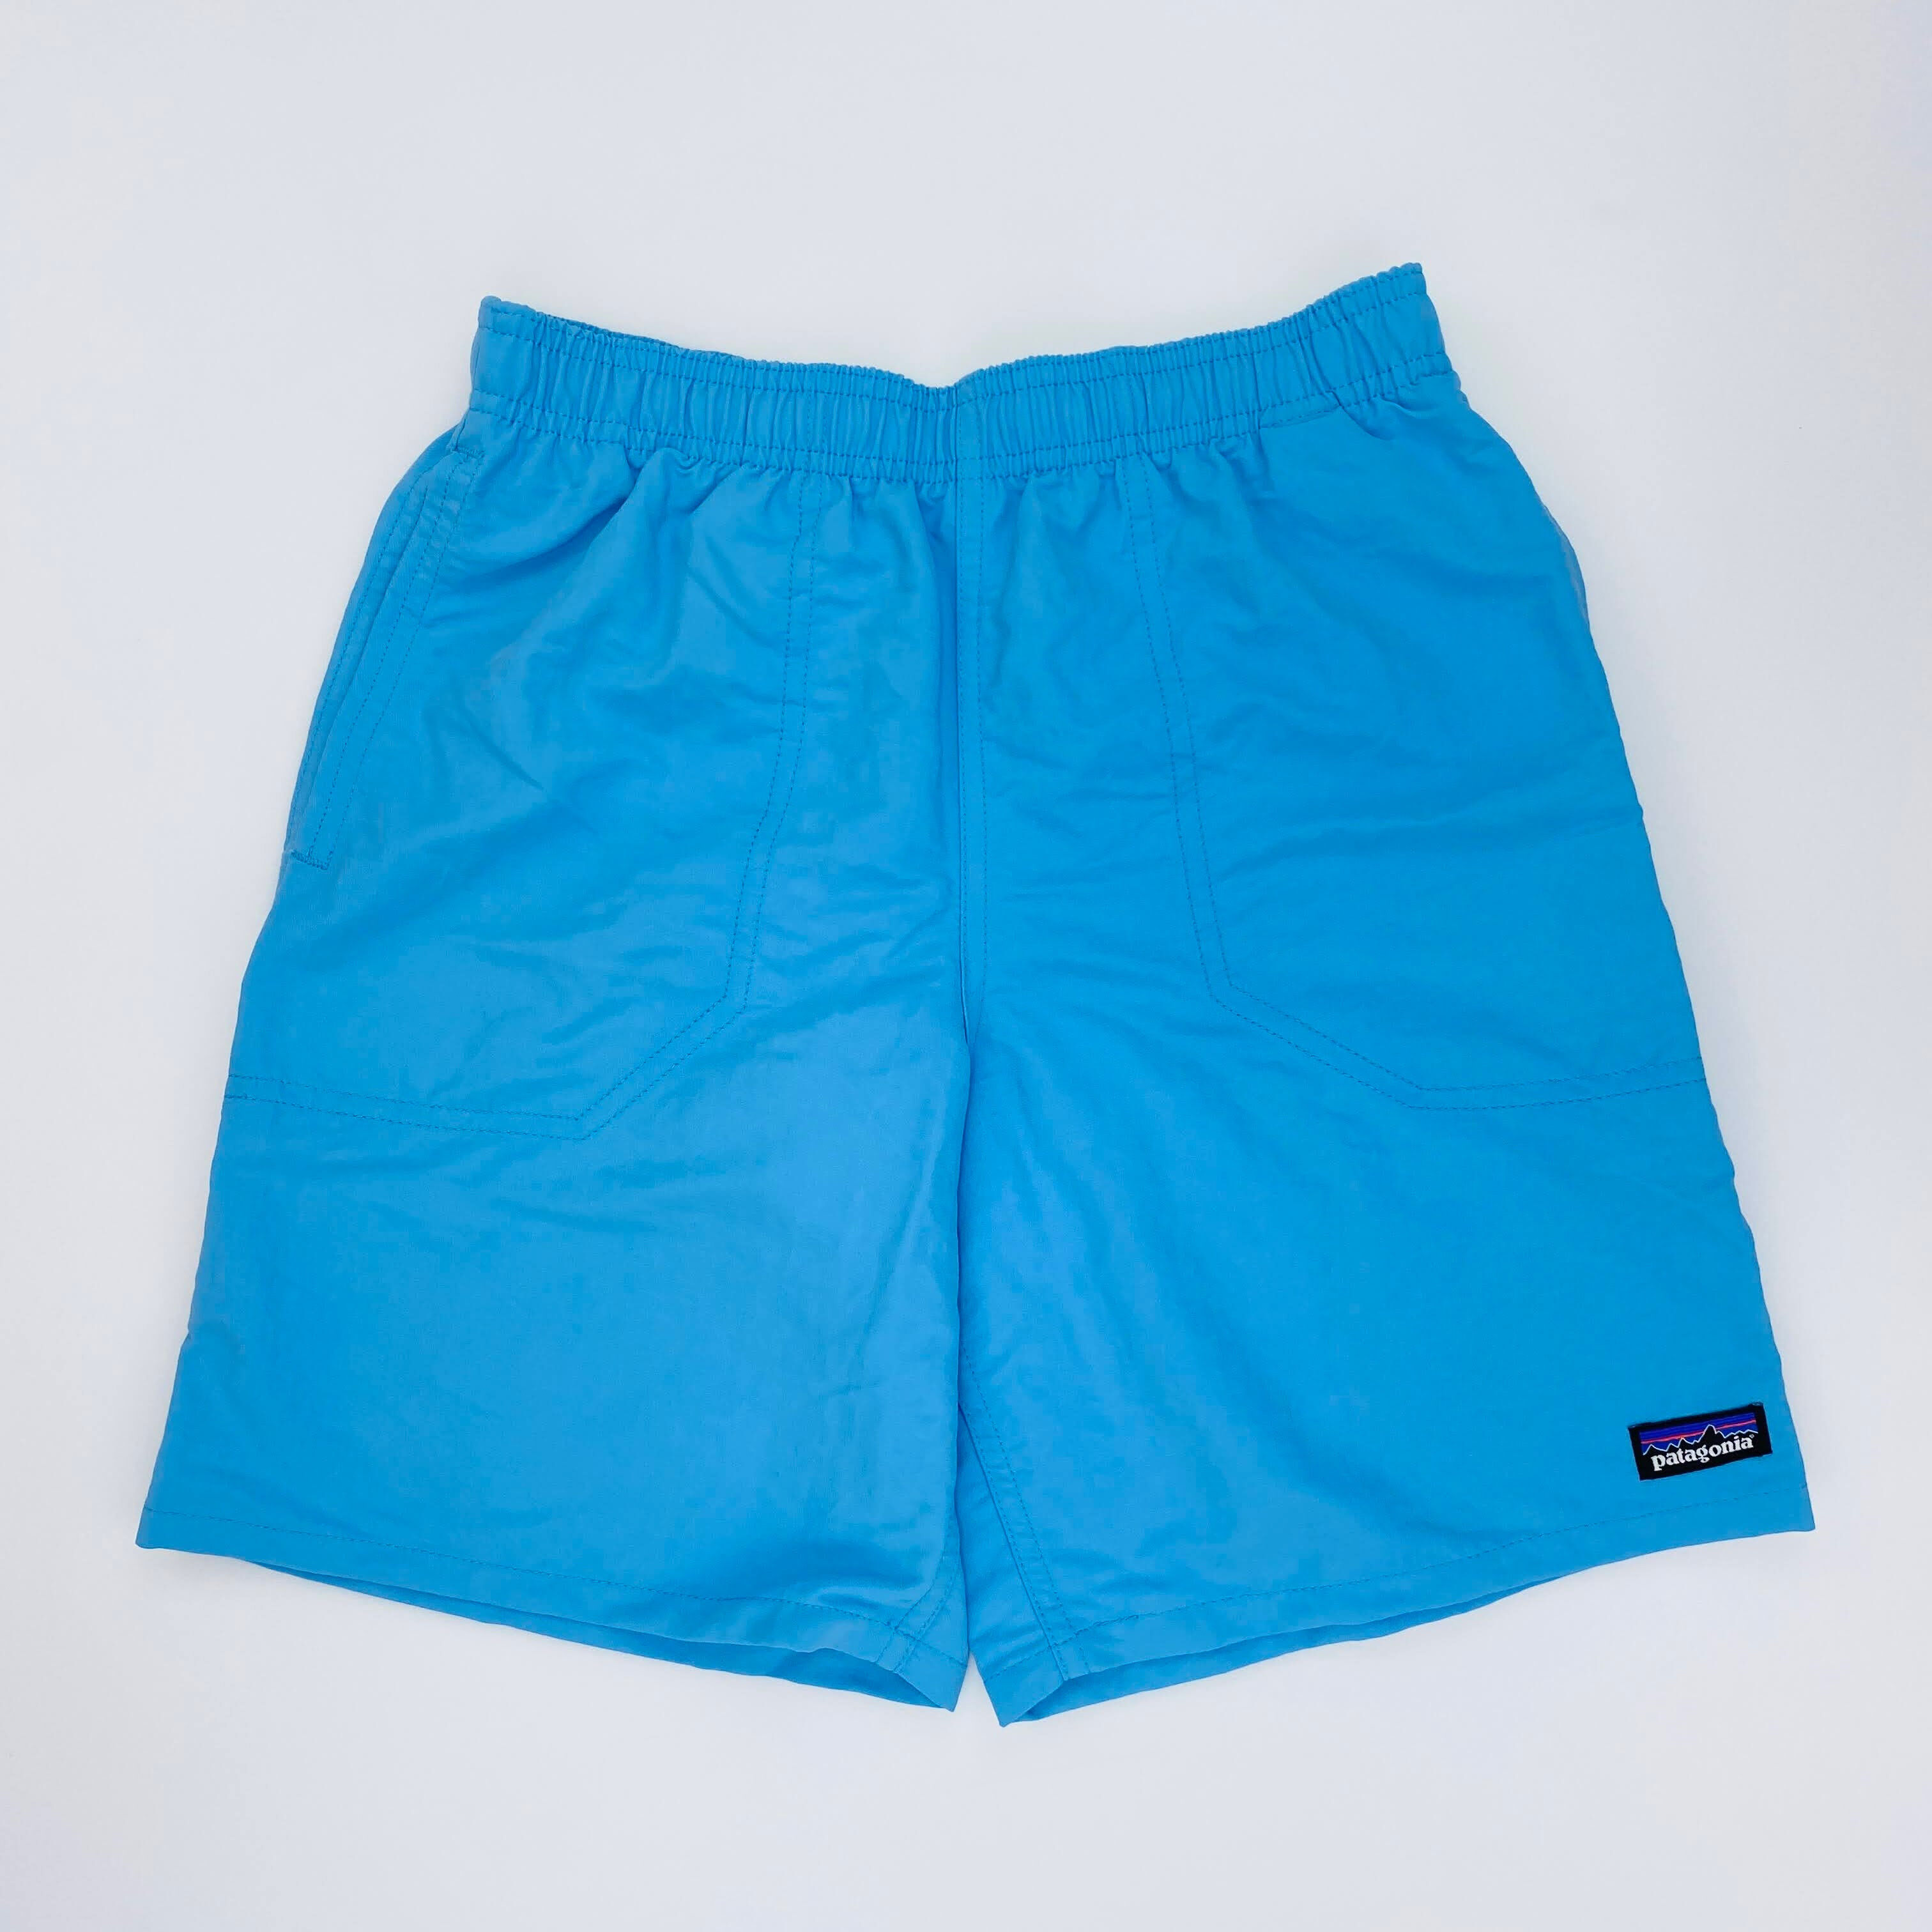 Patagonia K's Baggies Shorts 7 in. - Lined - Seconde main Short enfant - Bleu - M | Hardloop